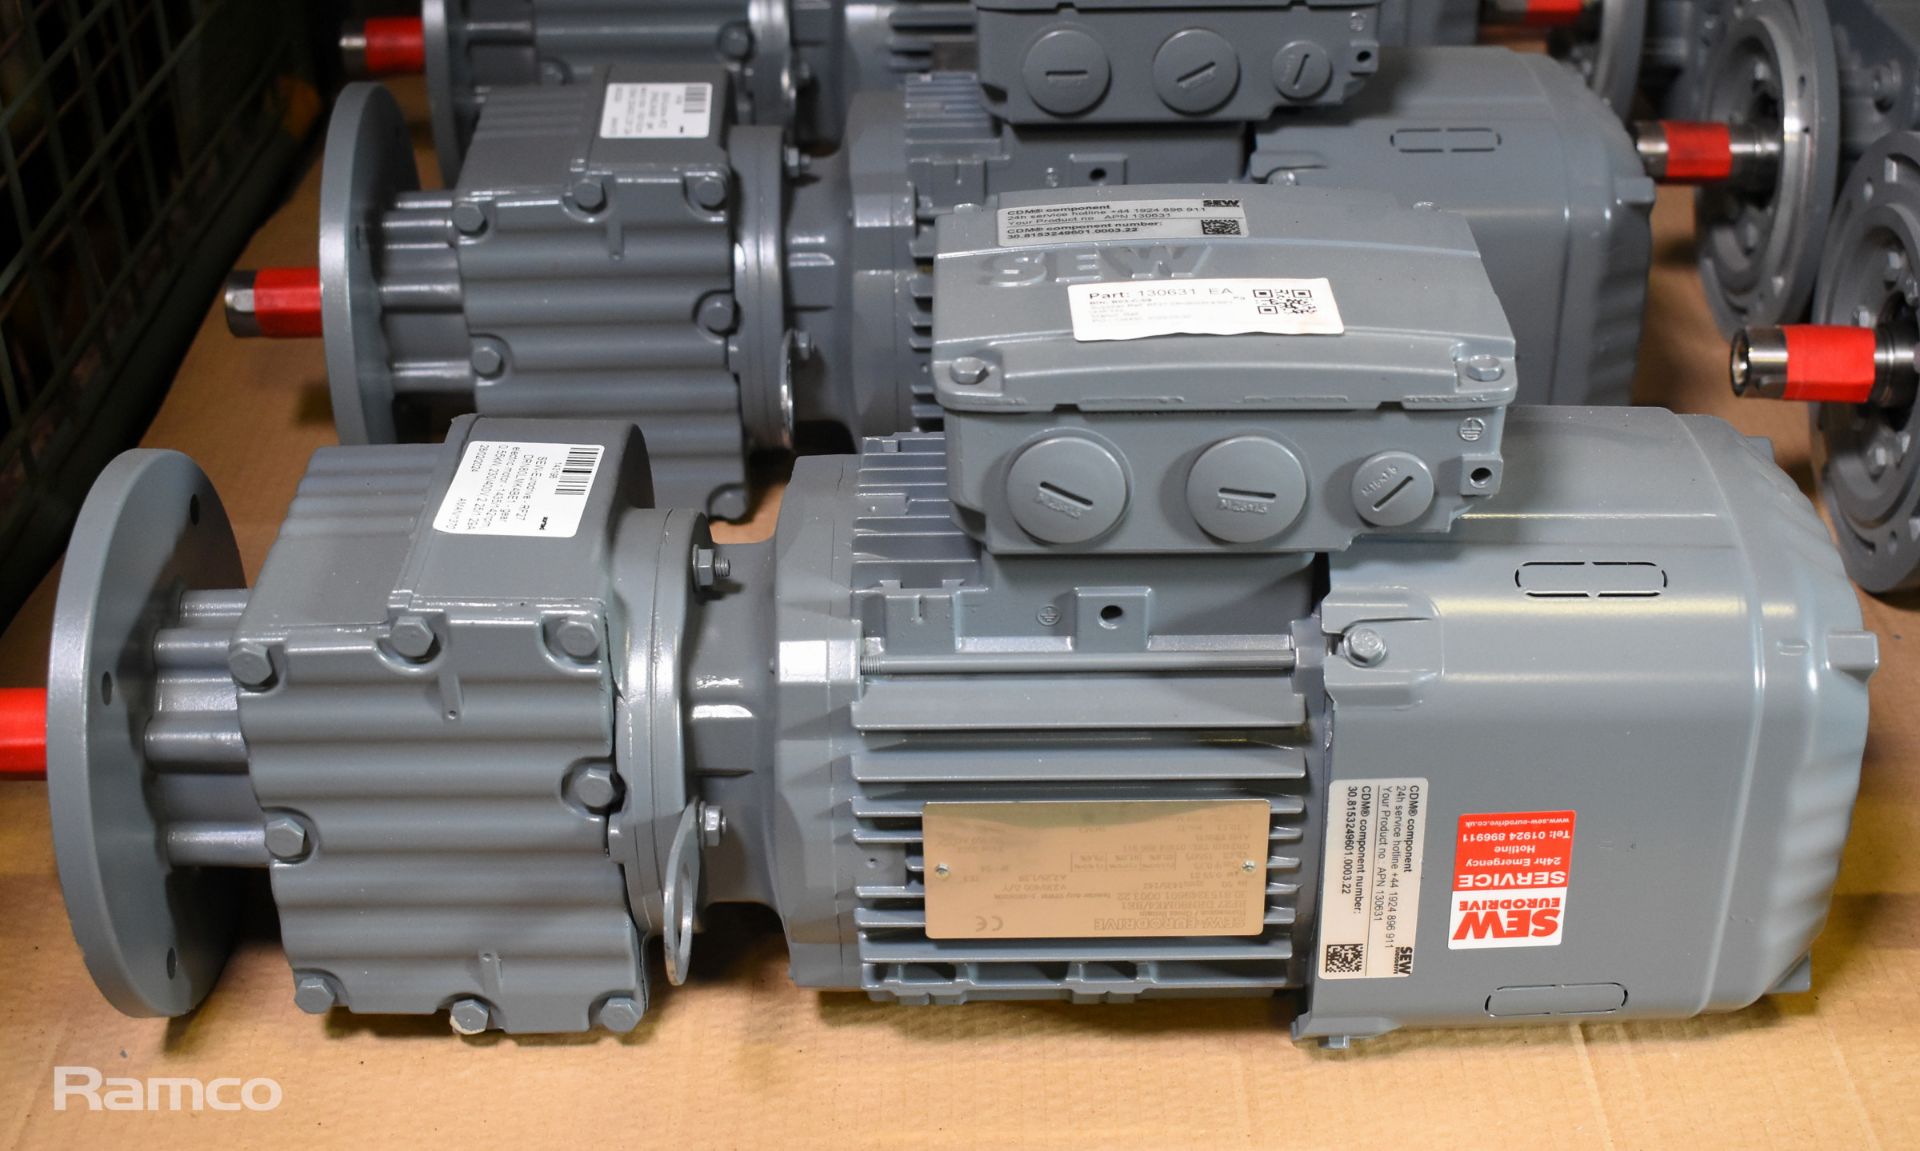 3x SEW-Eurodrive - RF27 DRN80LMK4BE1 electric gear motors - 1435/142rpm, 0.55kW, 230/400V, 2.25/1.29 - Image 2 of 5